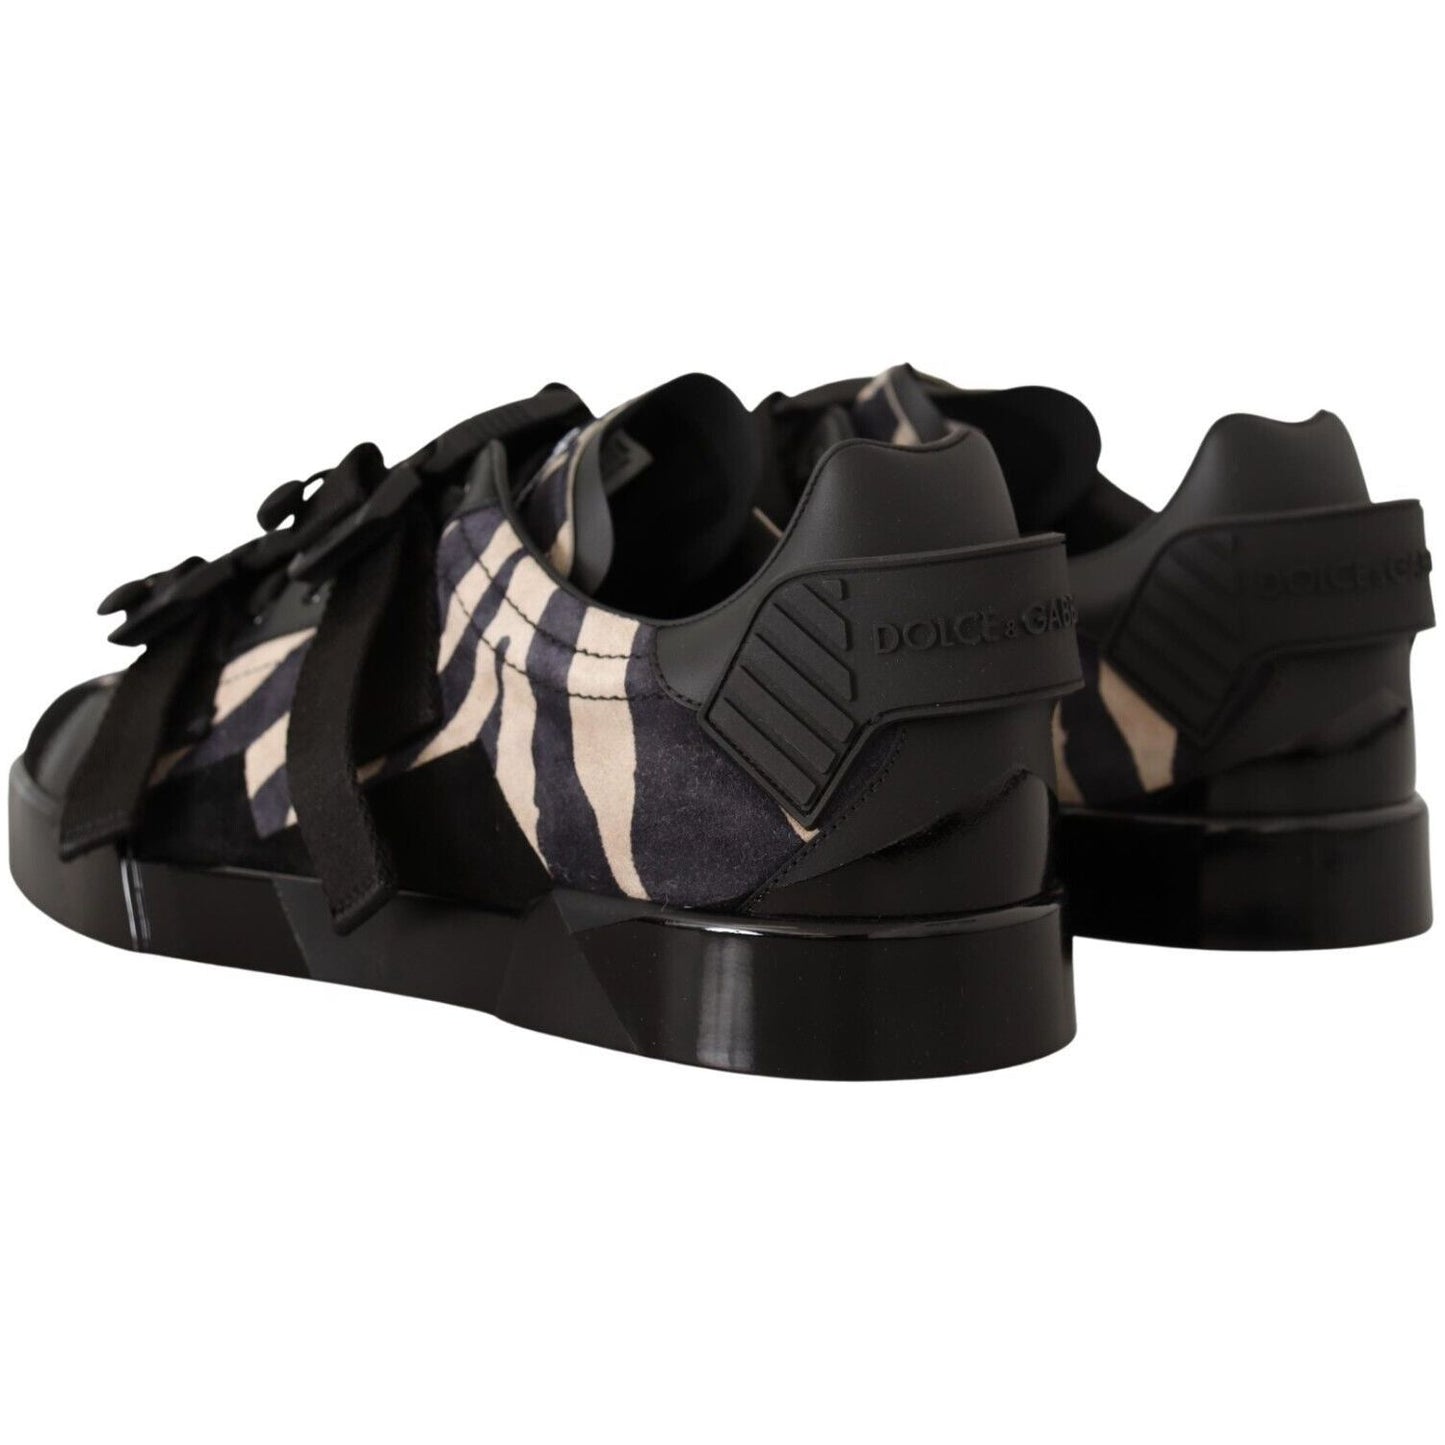 Dolce & Gabbana Zebra Suede Low Top Fashion Sneakers black-white-zebra-suede-rubber-sneakers-shoes-2 MAN SNEAKERS s-l1600-1-68-ccf999ee-fc2.jpg